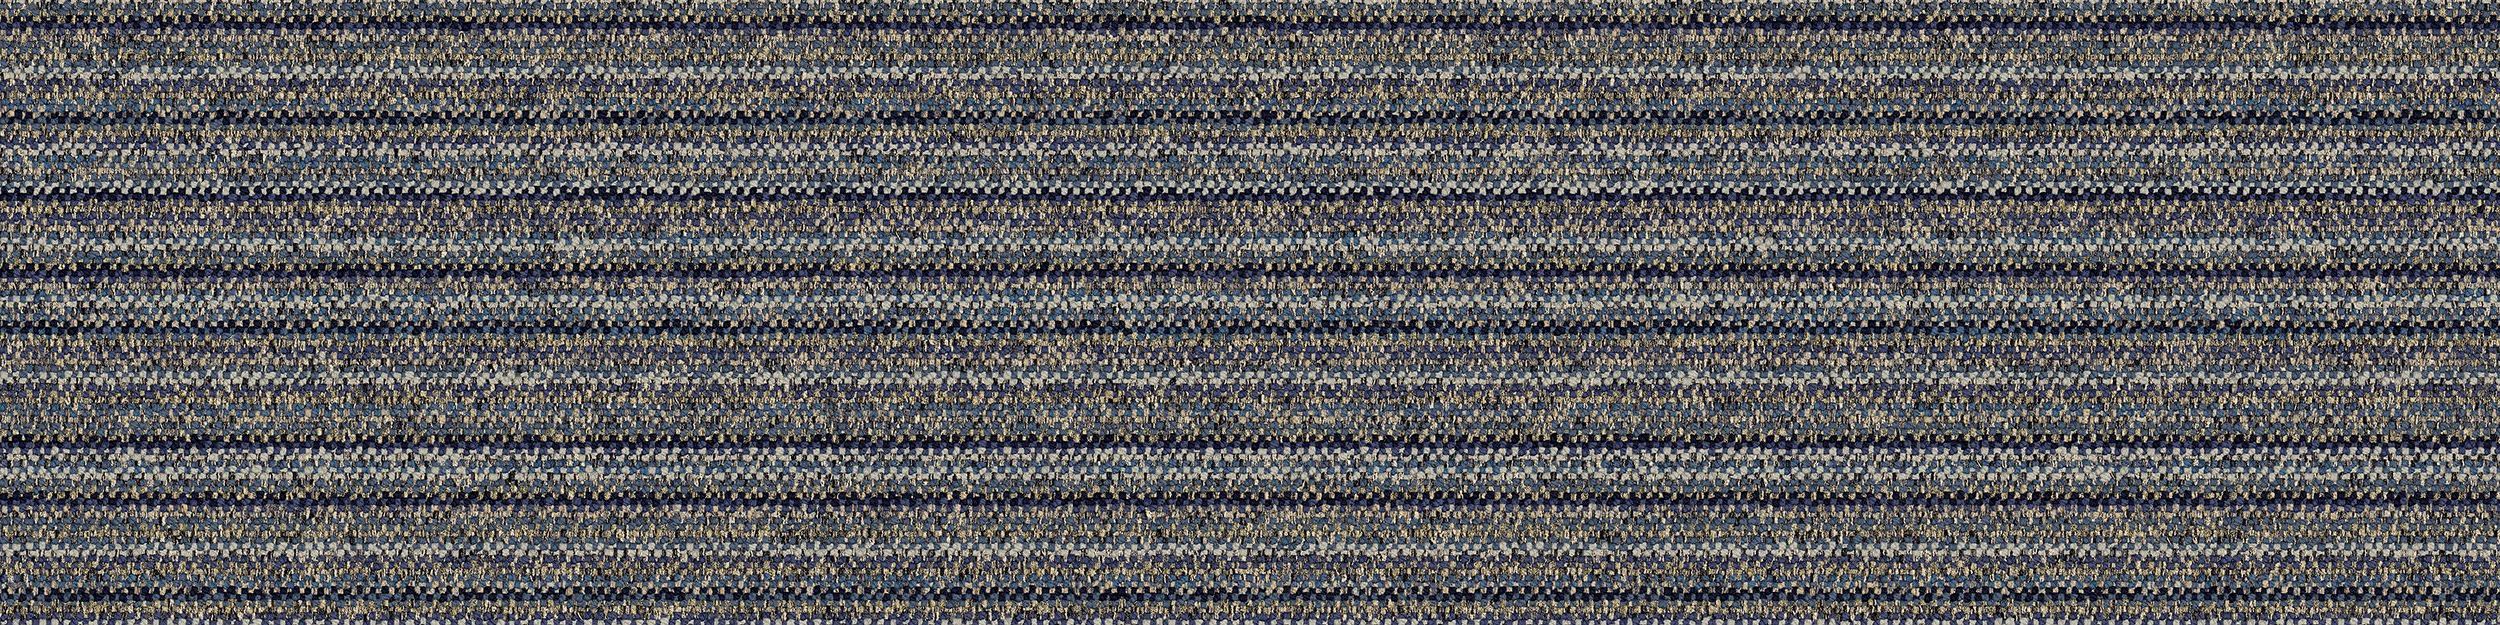 WW865 Carpet Tile In Highand Warp image number 2